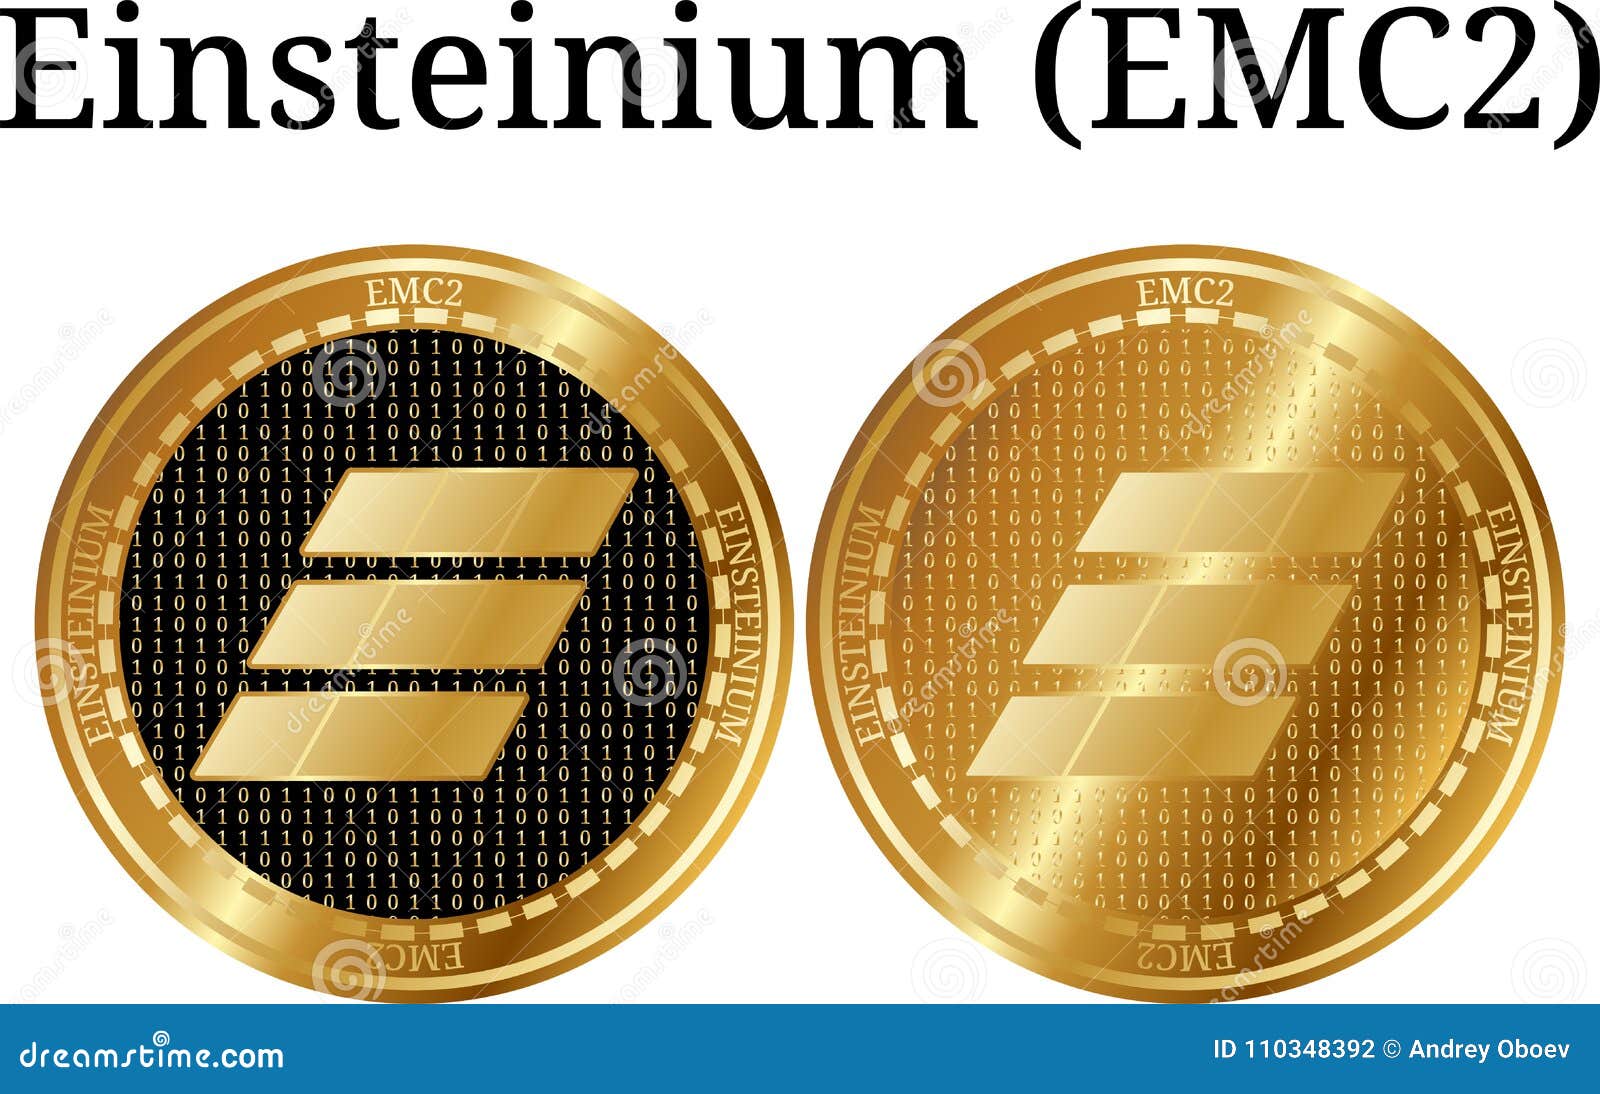 Einsteinium cryptocurrency easy way buy bitcoins